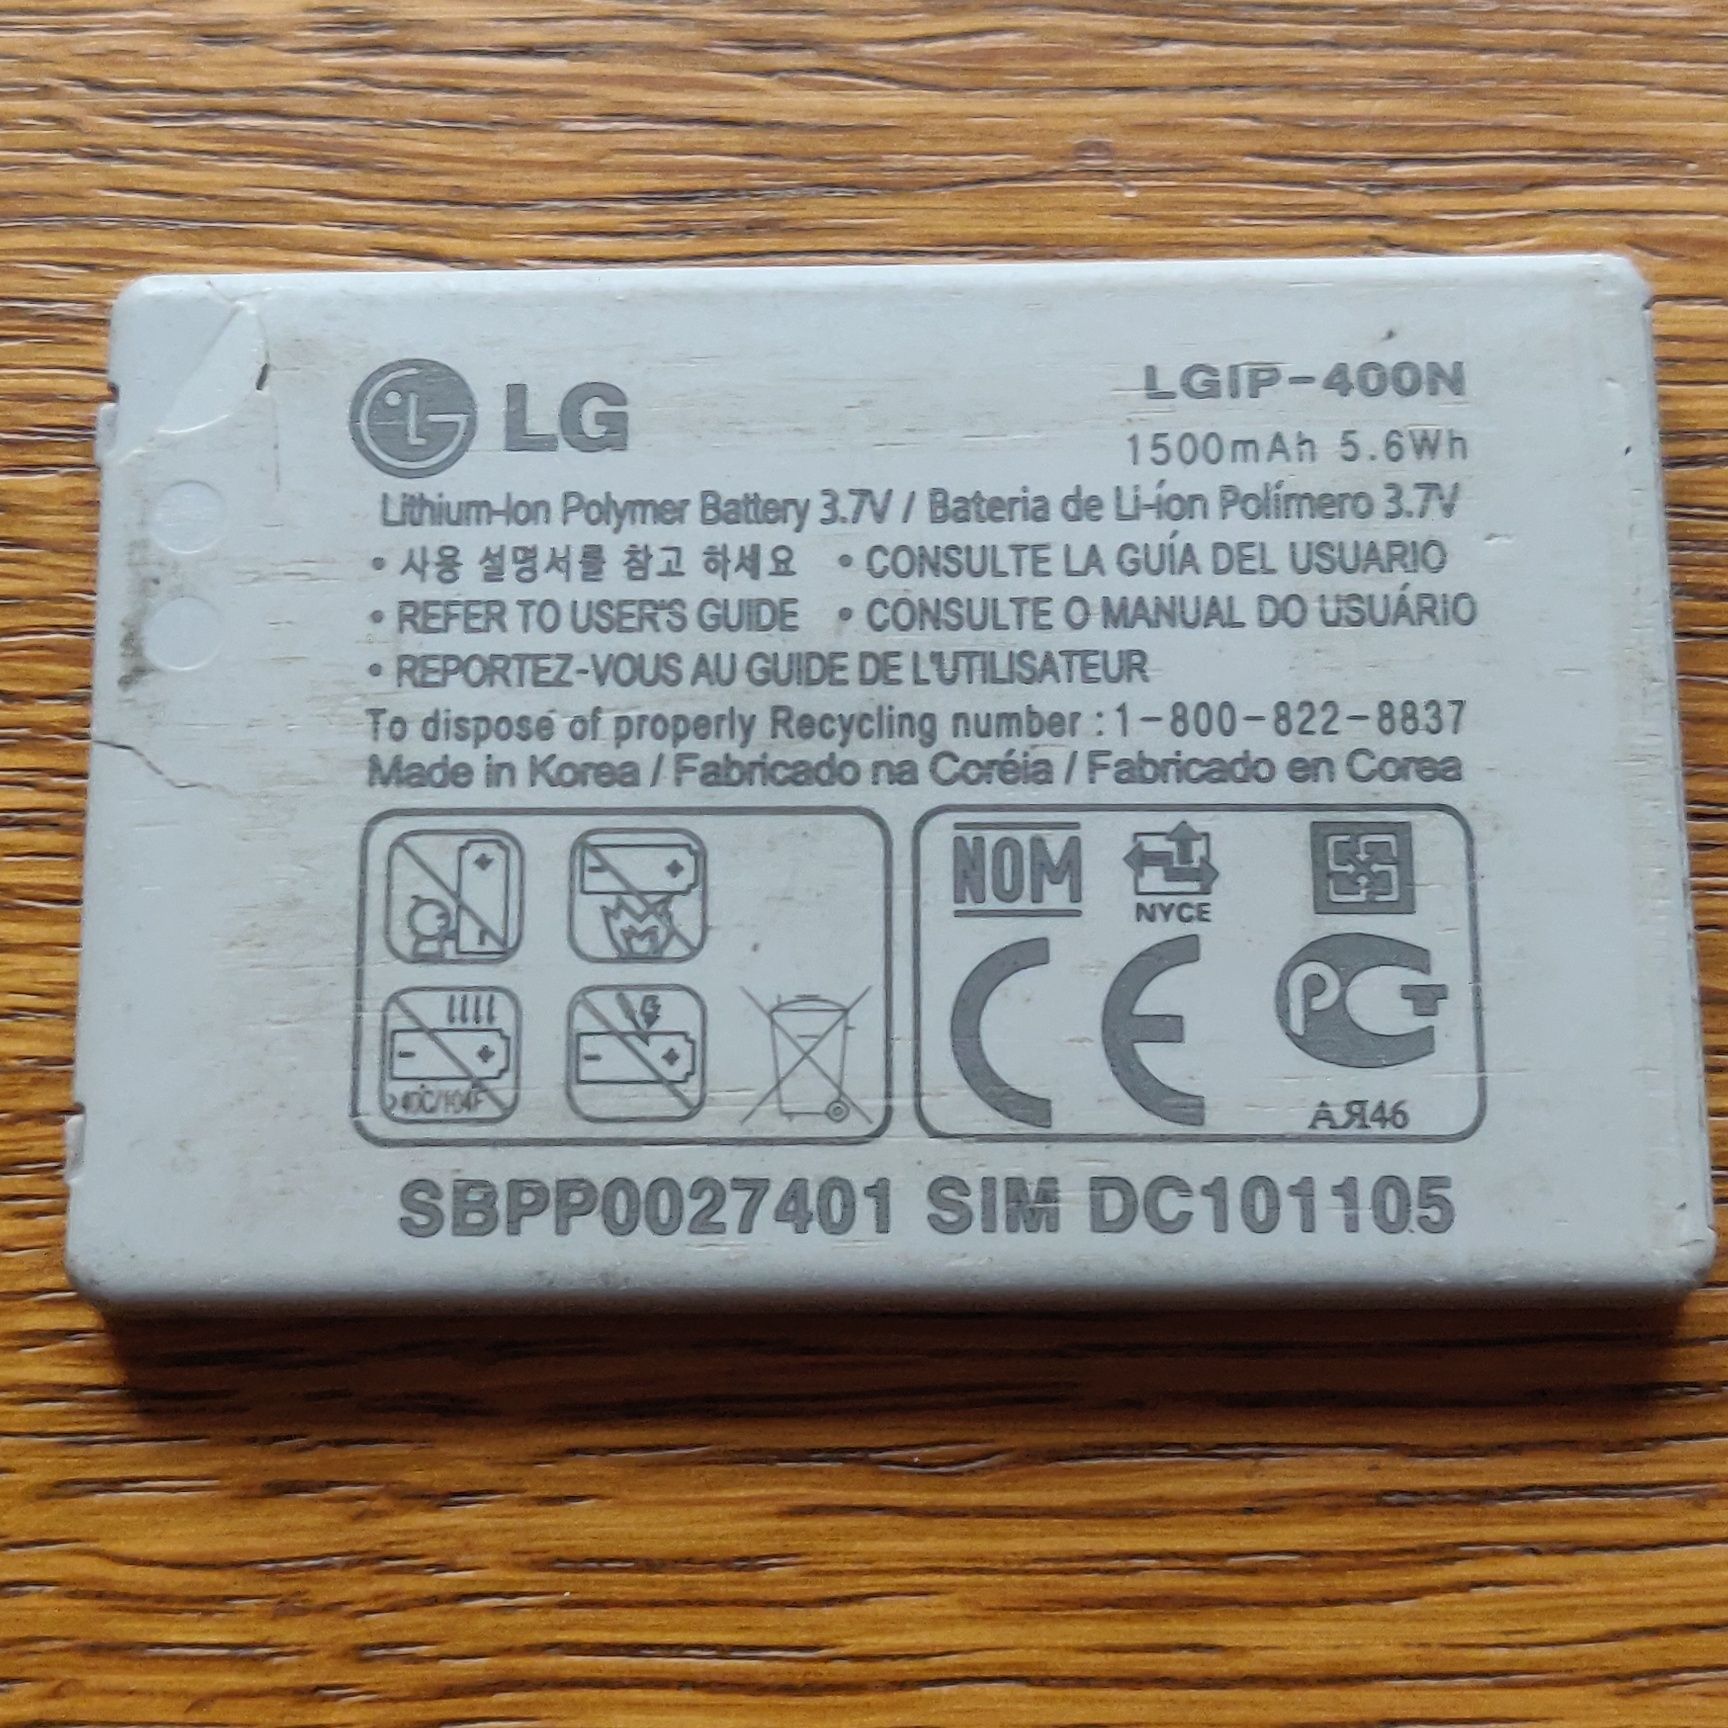 Oryginalna bateria LG, LGIP-400N, 1500 mAh, 3,7 V